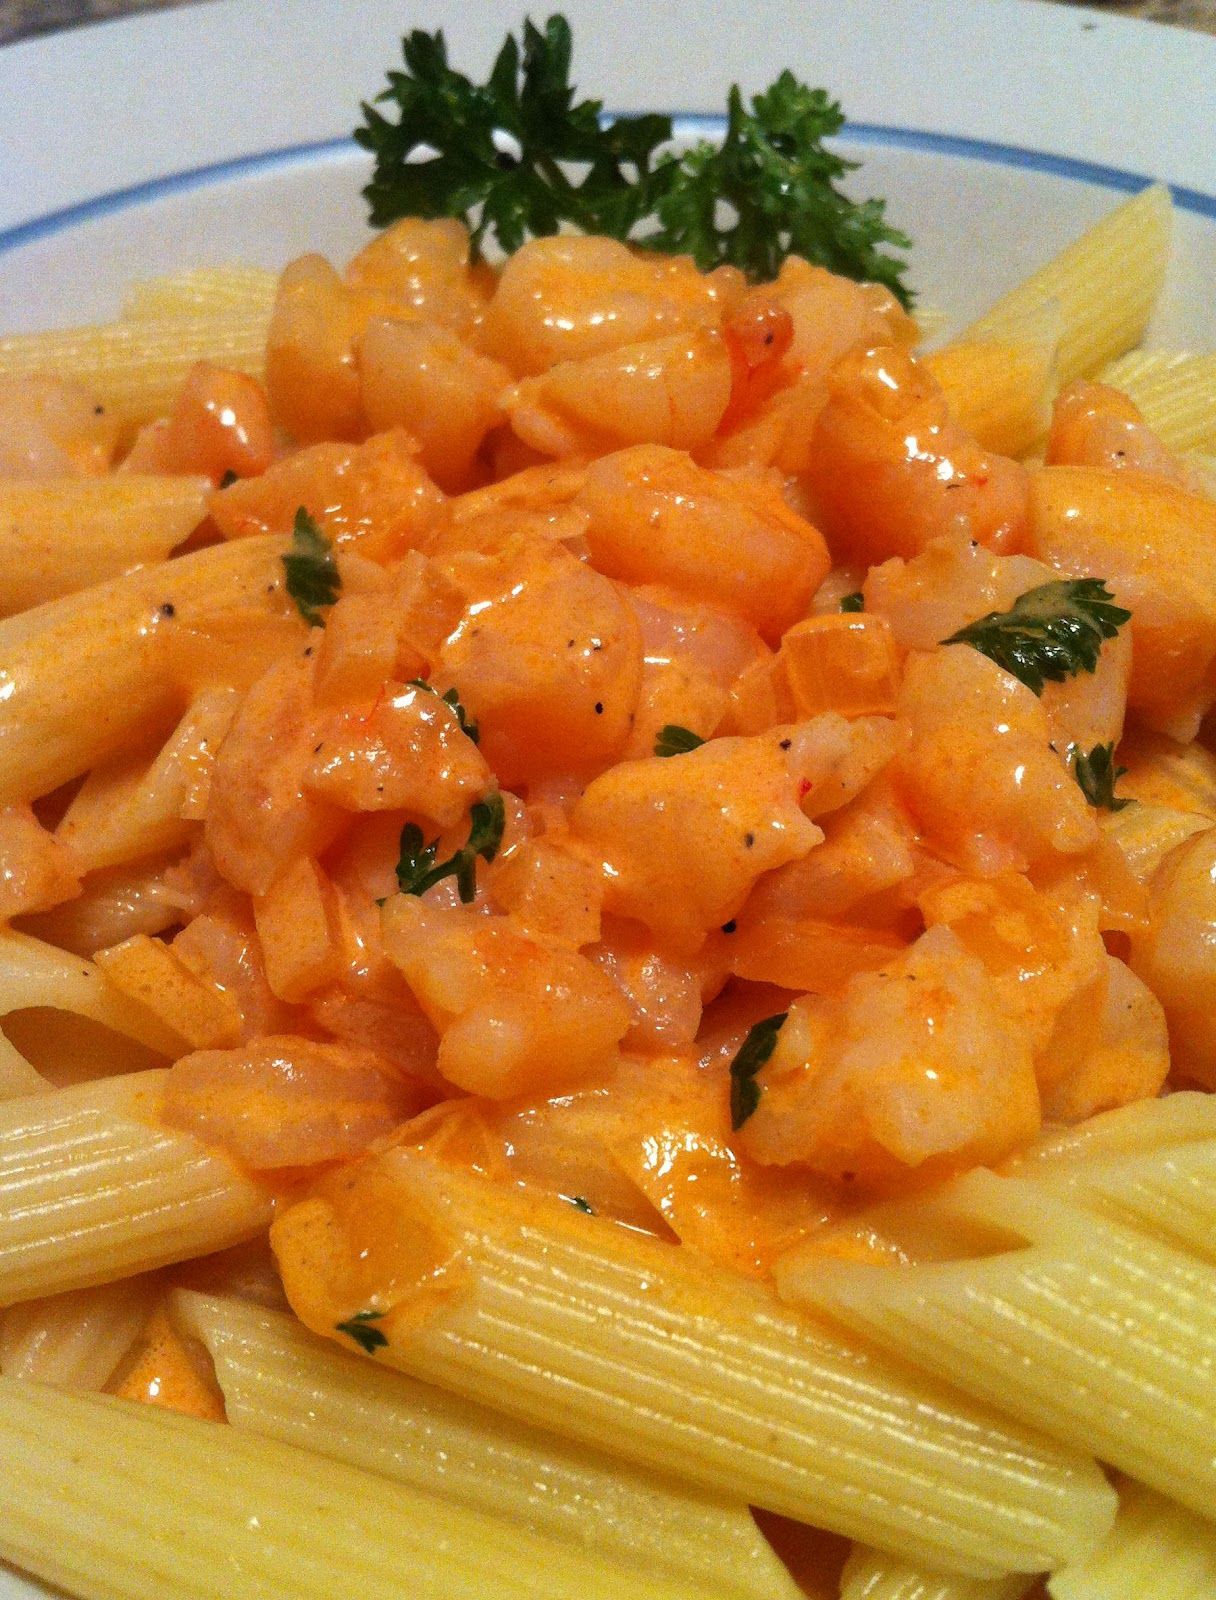 Shrimp pasta with tomato cream sauce. Shrimp, pasta, cream, tomato sauce, onions